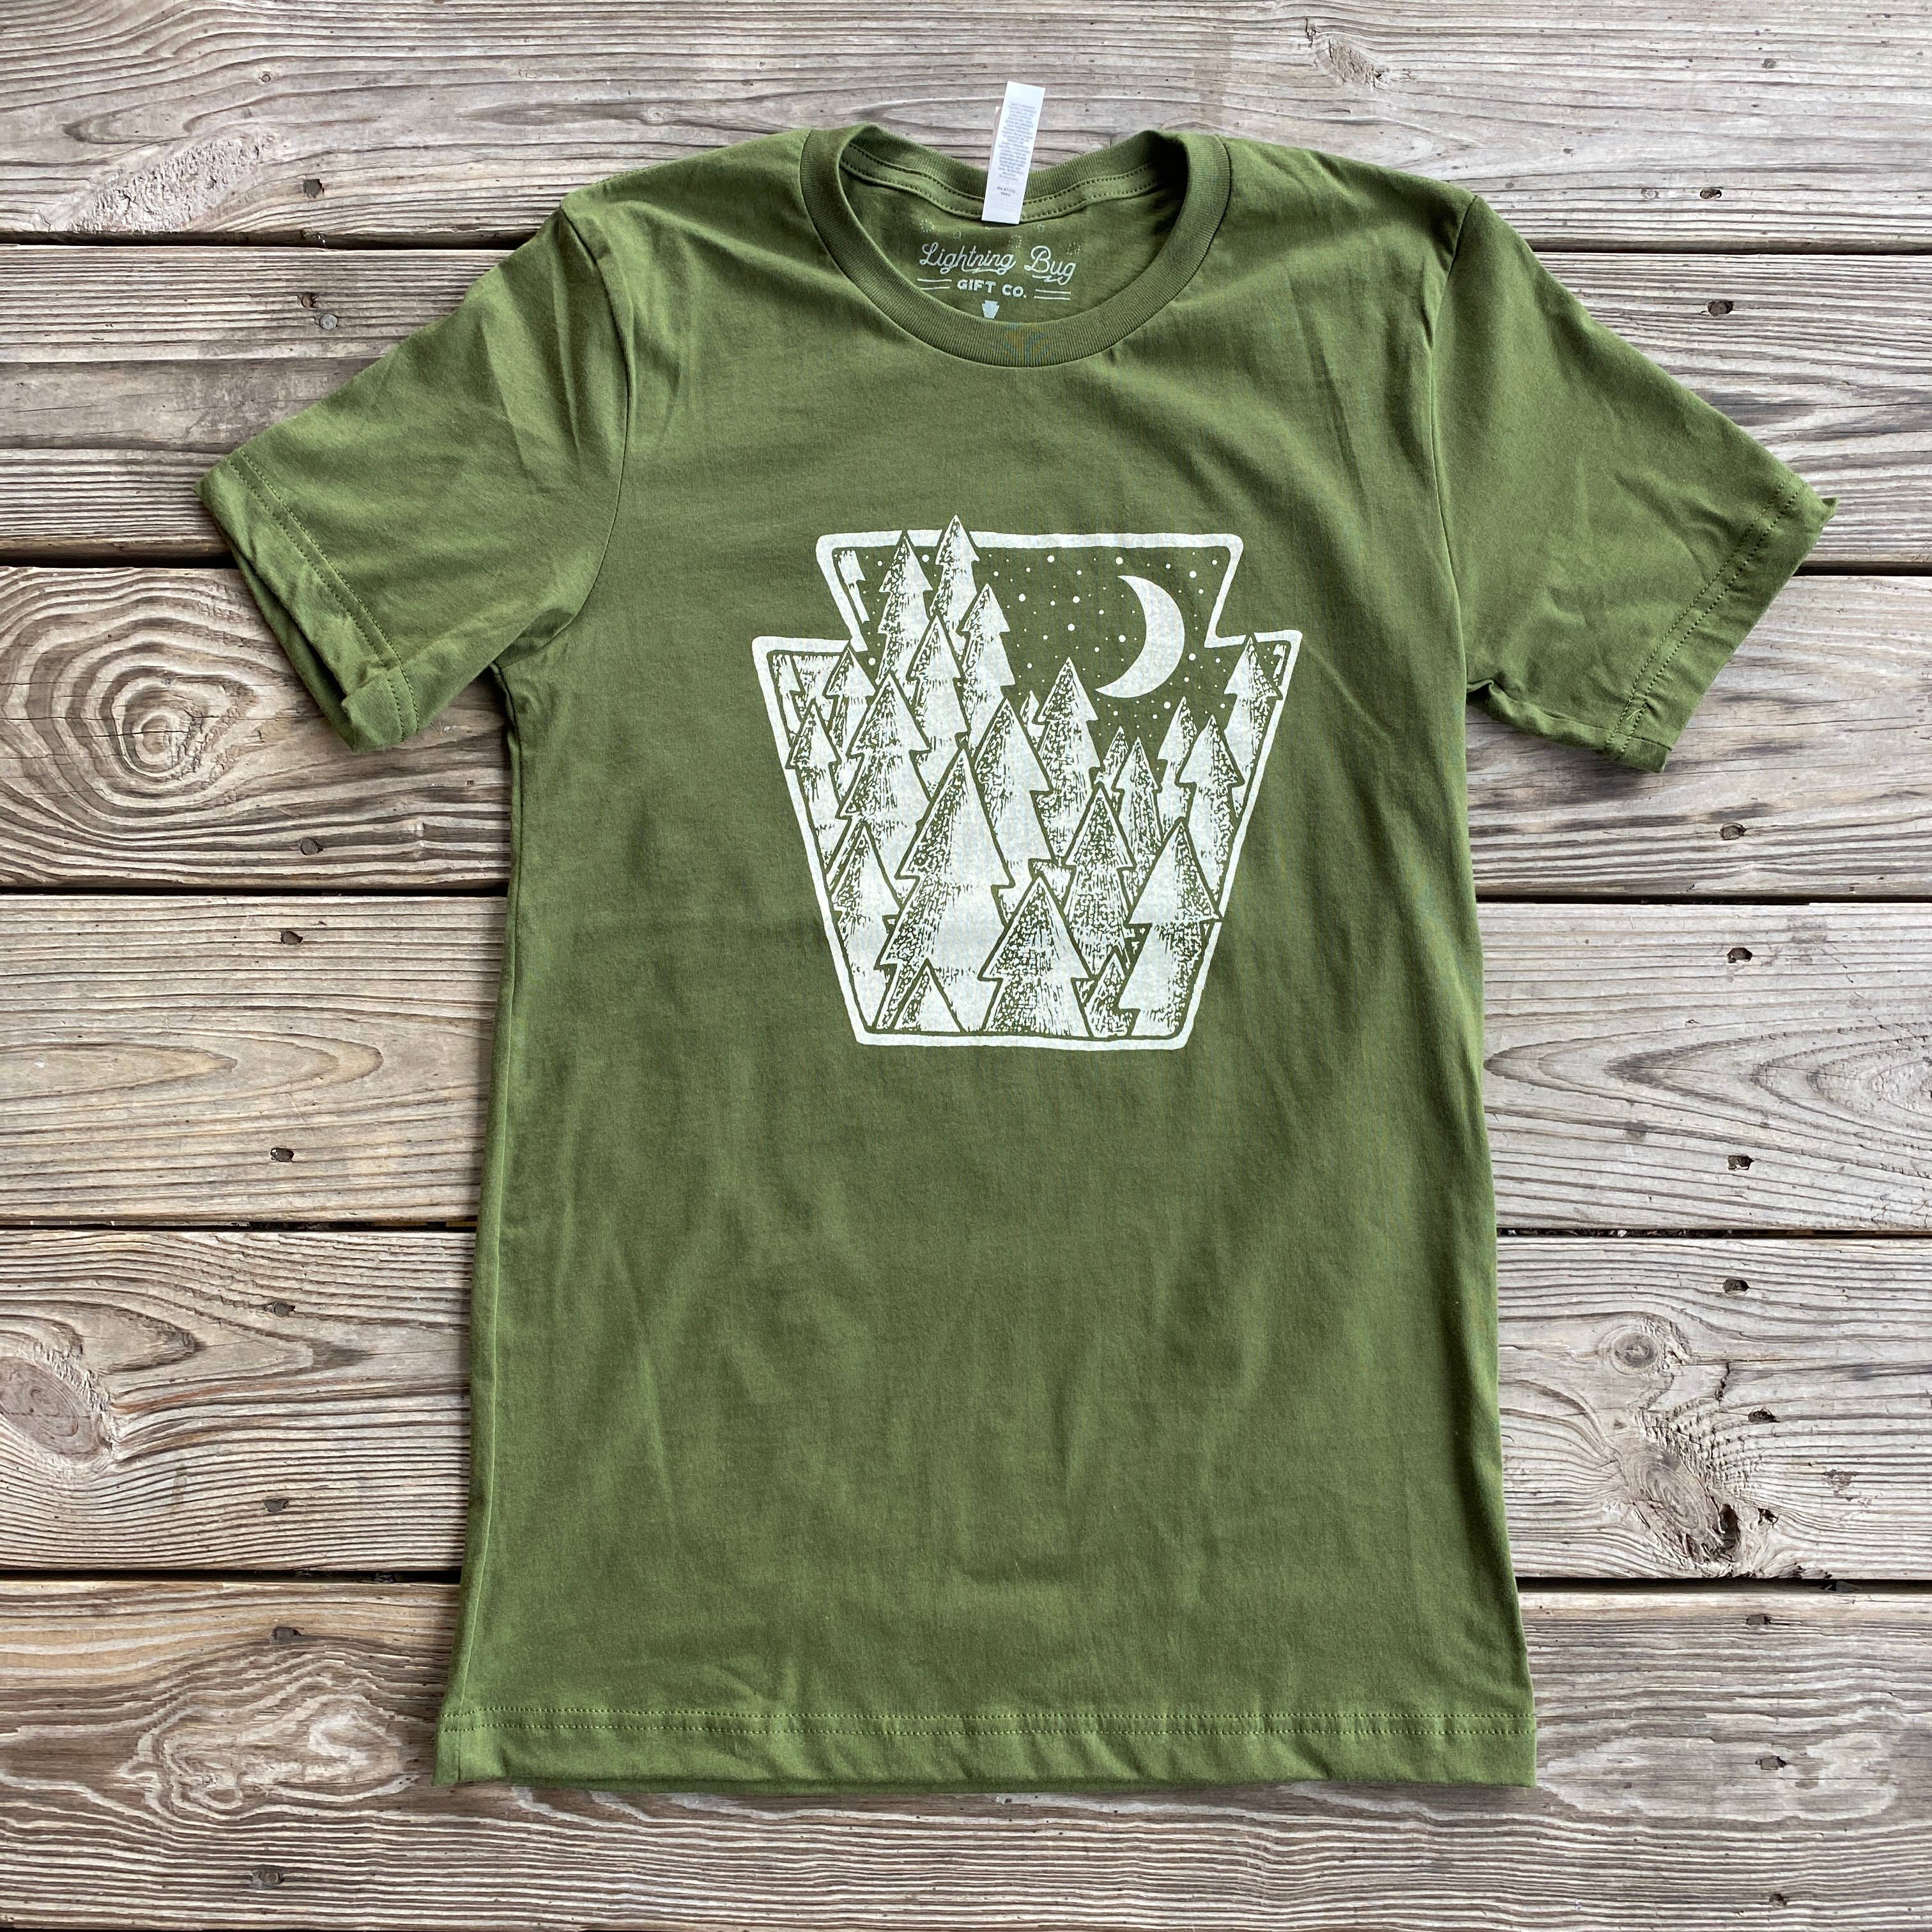 Lightning Bug Gift Co. - Pennsylvania Keystone Pines T-shirt: Small